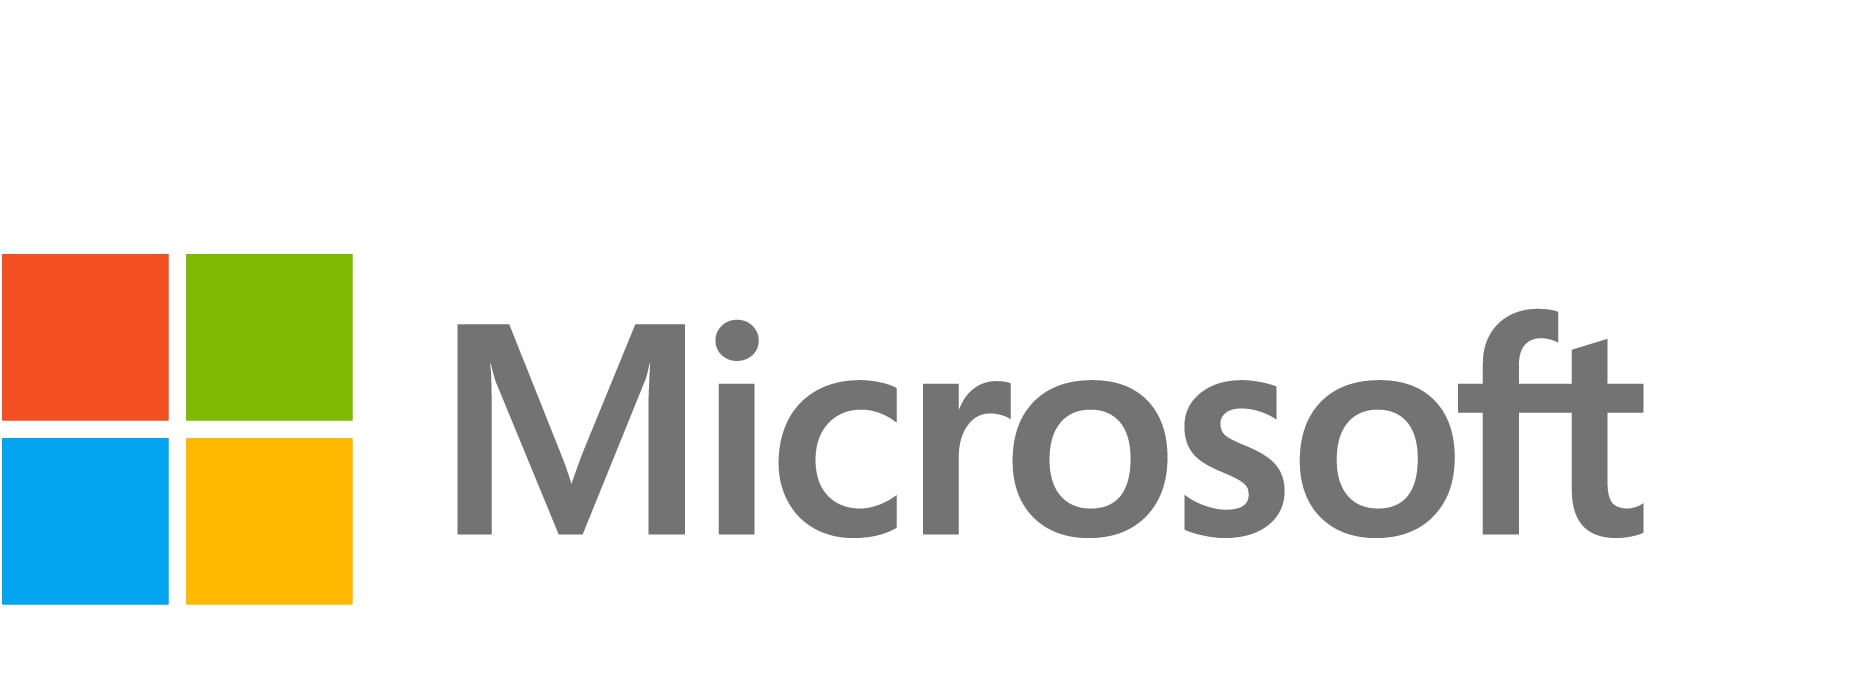 Microsoft Office Standard Edition - license & software assurance - 1 PC